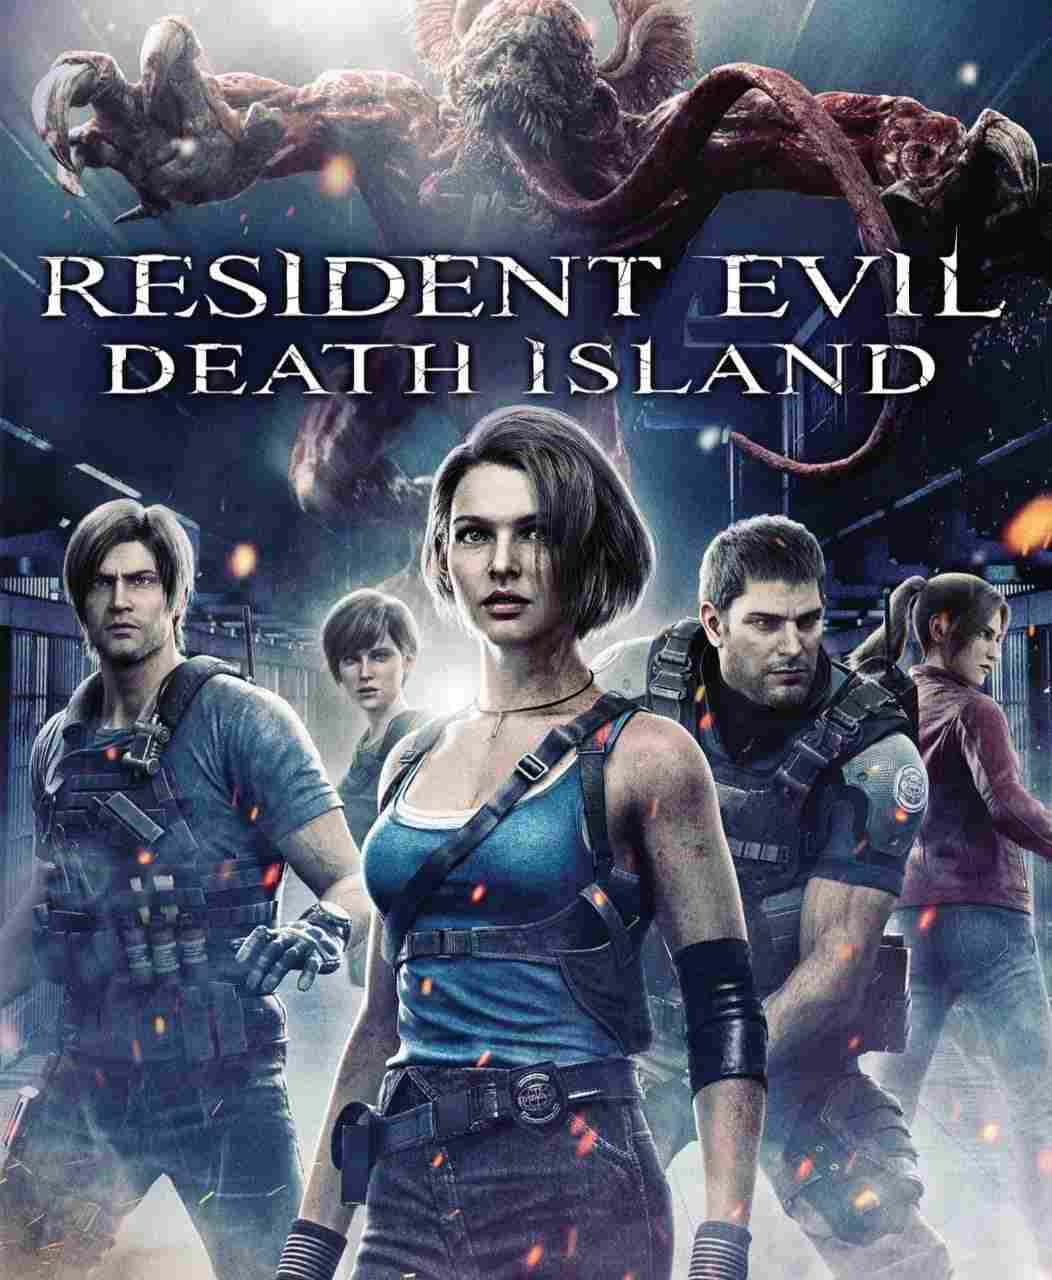 Resident Evil Death Island Movie Download Direct Link